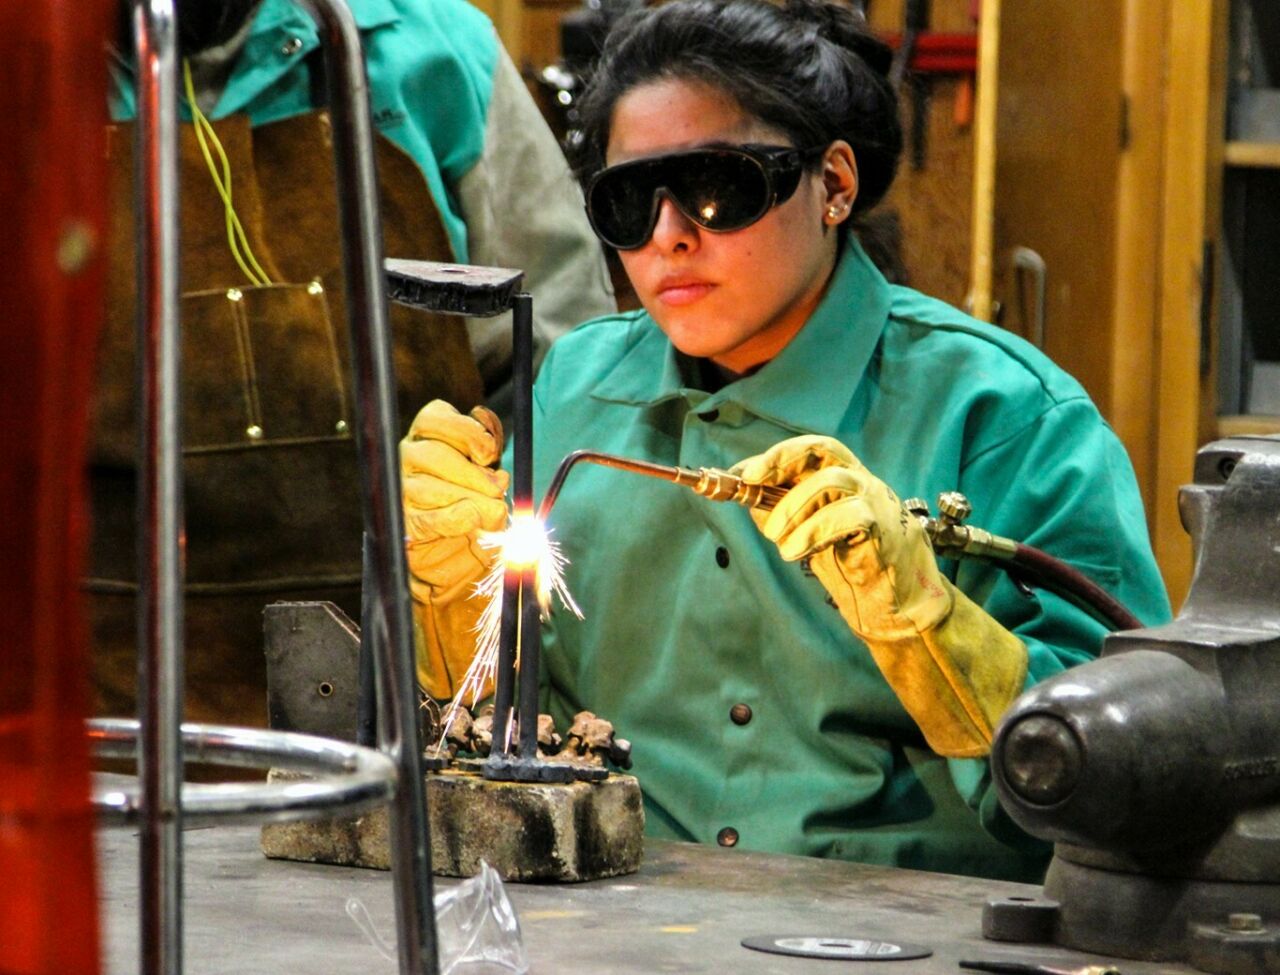 SoVA student using an arc welder fusing metals together.